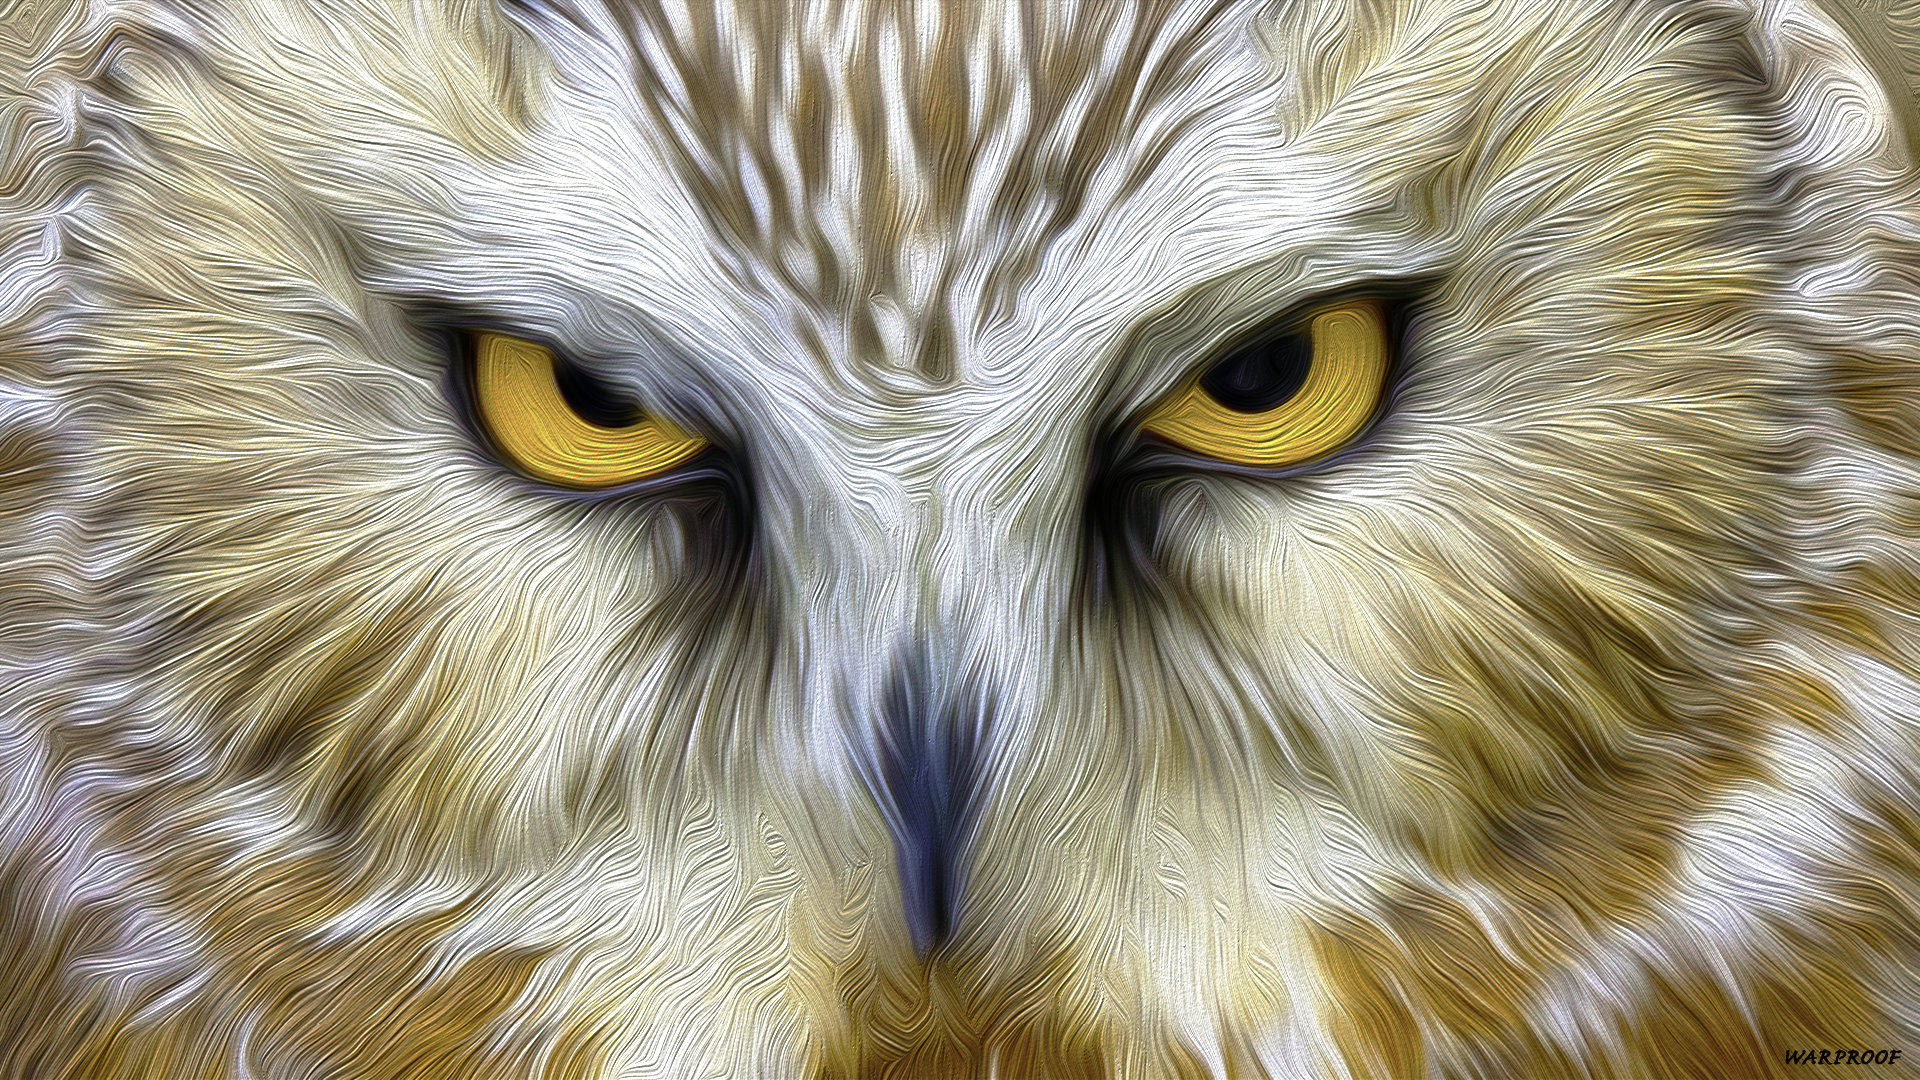 Best Owl wallpaper ID:236942 for High Resolution full hd 1920x1080 desktop